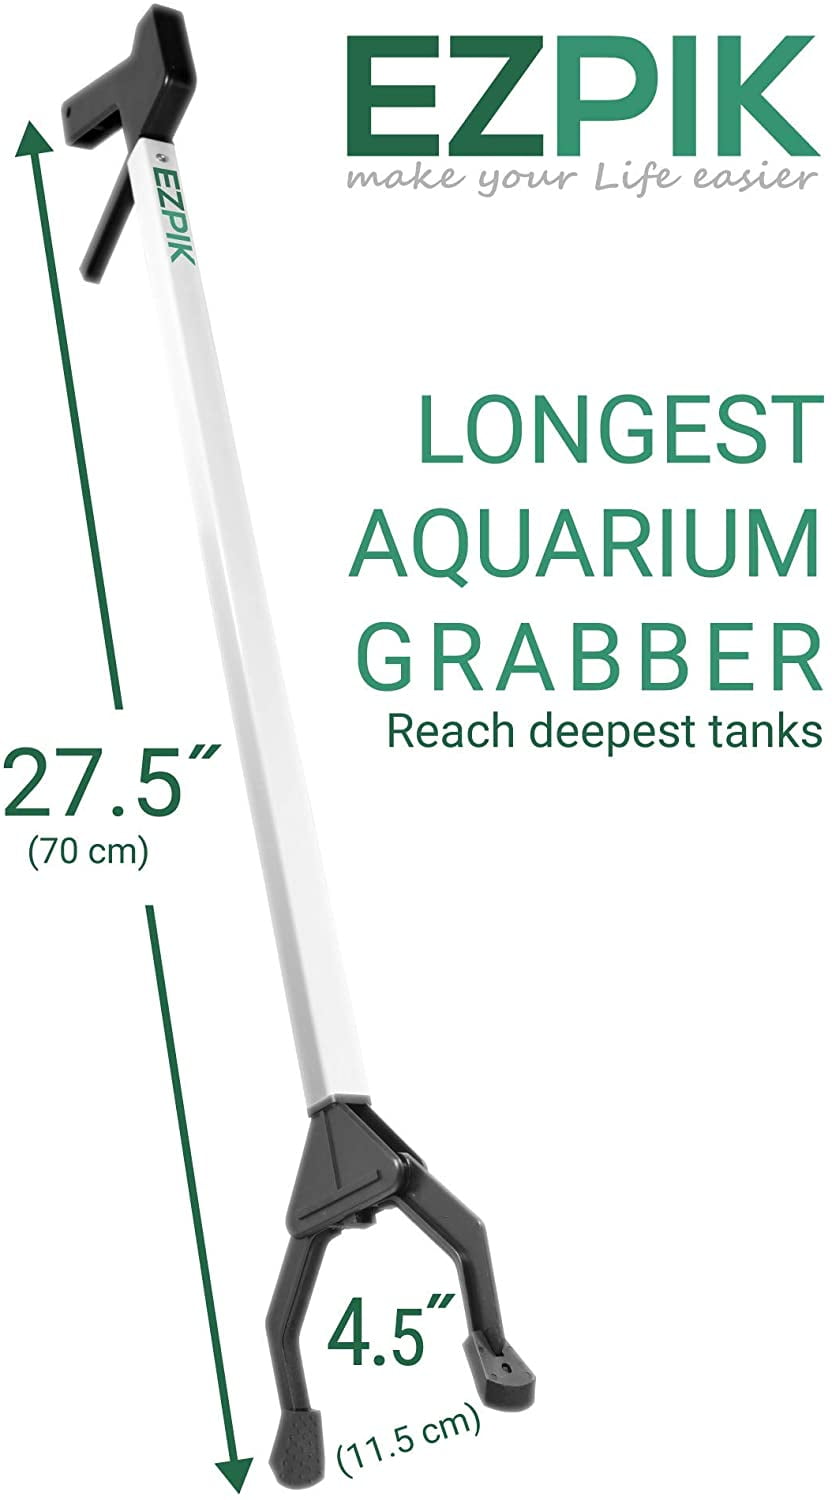 JBJ Aqua Tongs 27 Inch Aquarium Spring-action GRABBER With Trimmer  Maintenance for sale online